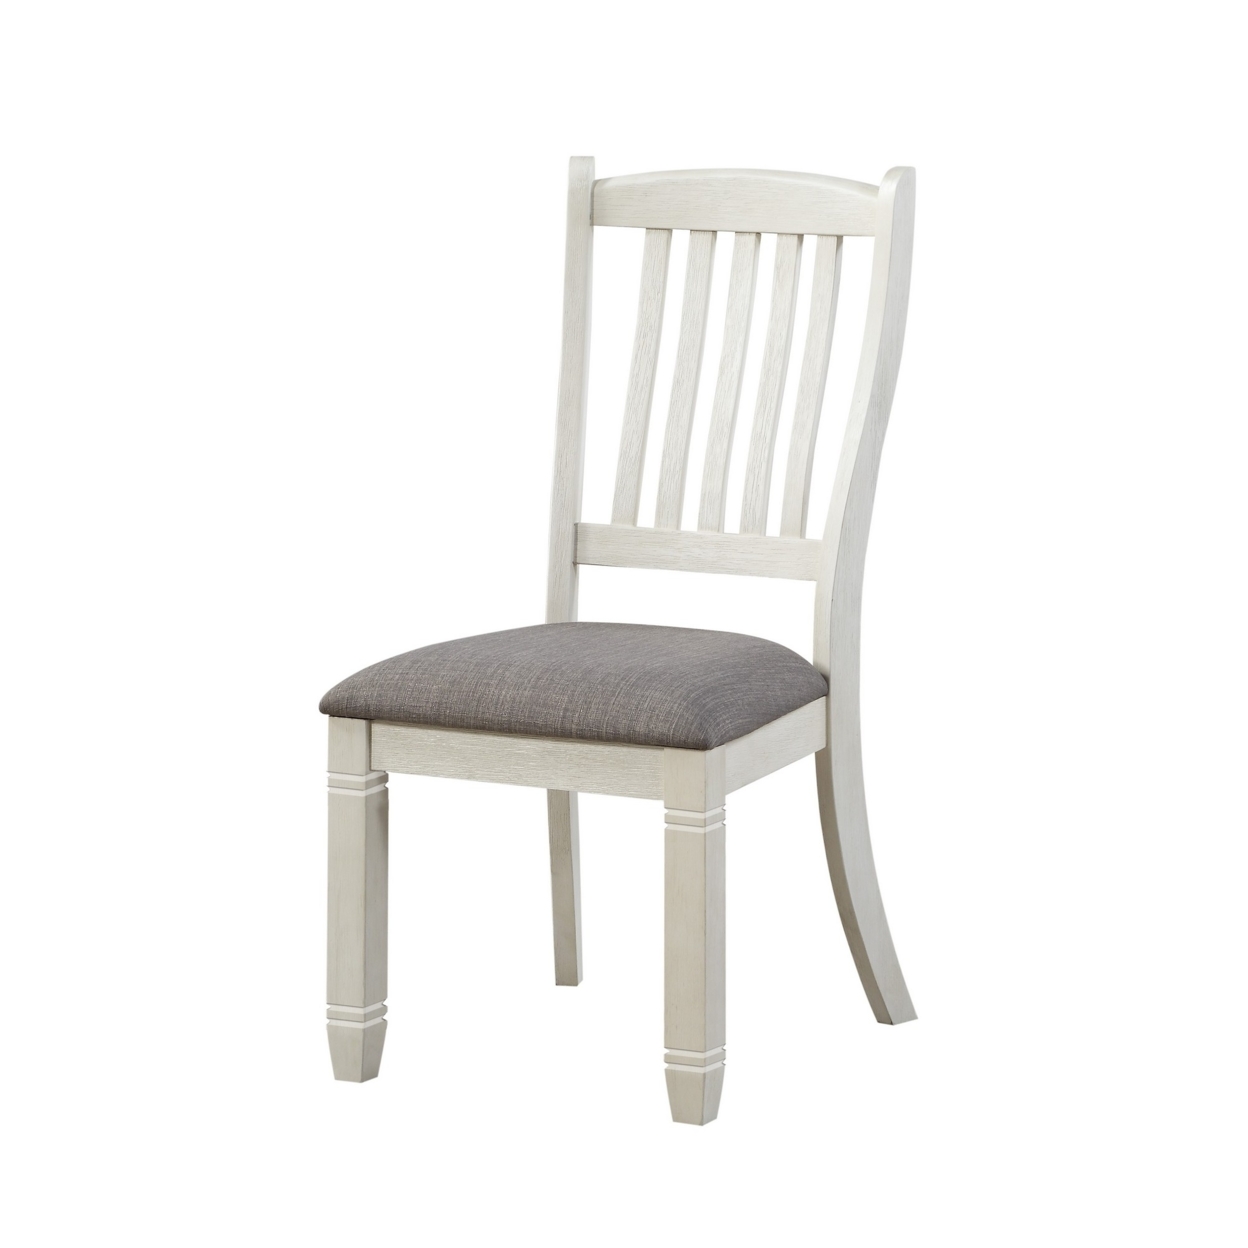 Wooden Side Chair With Flared Design Slatted Back, Set Of 2, Antique White- Saltoro Sherpi